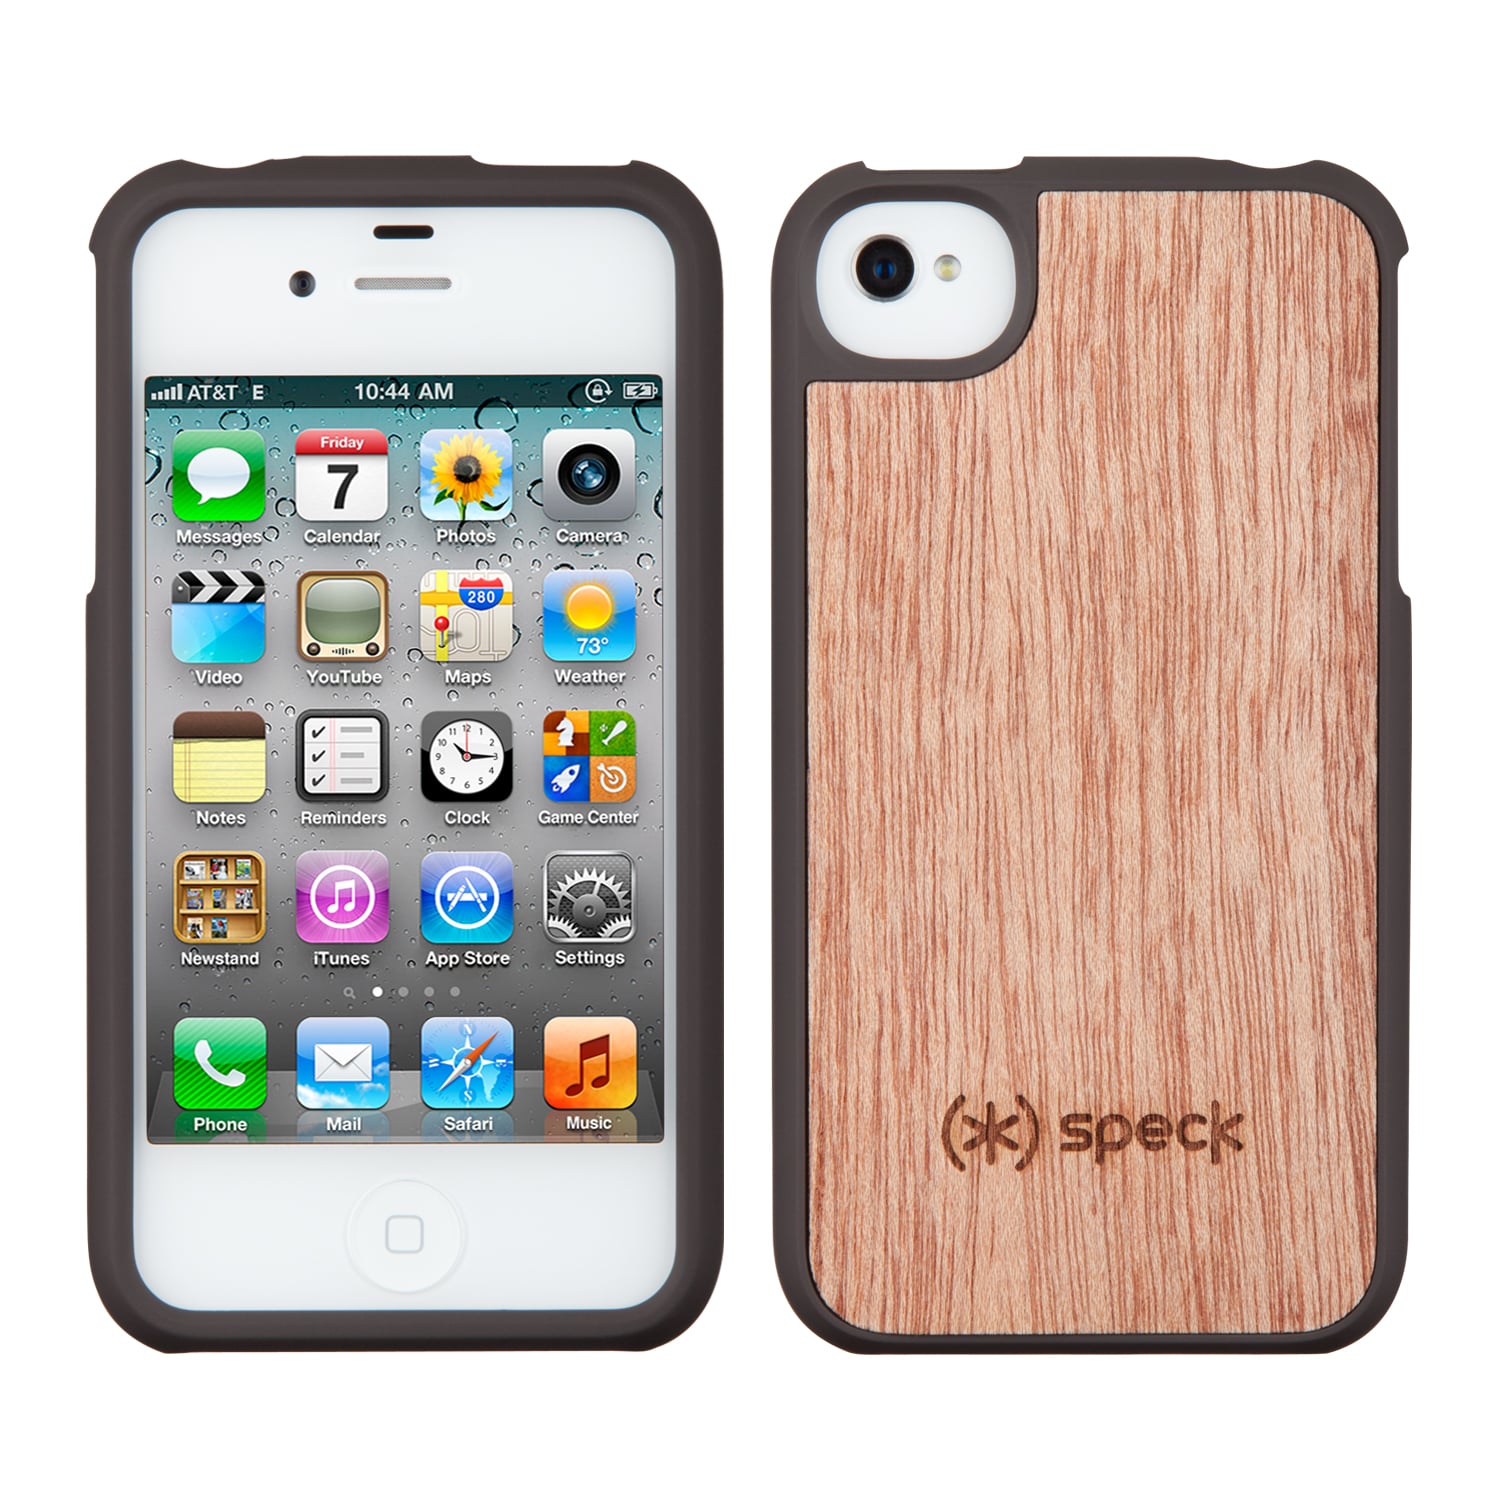 iPhone 4S Case Speck POPSUGAR Tech